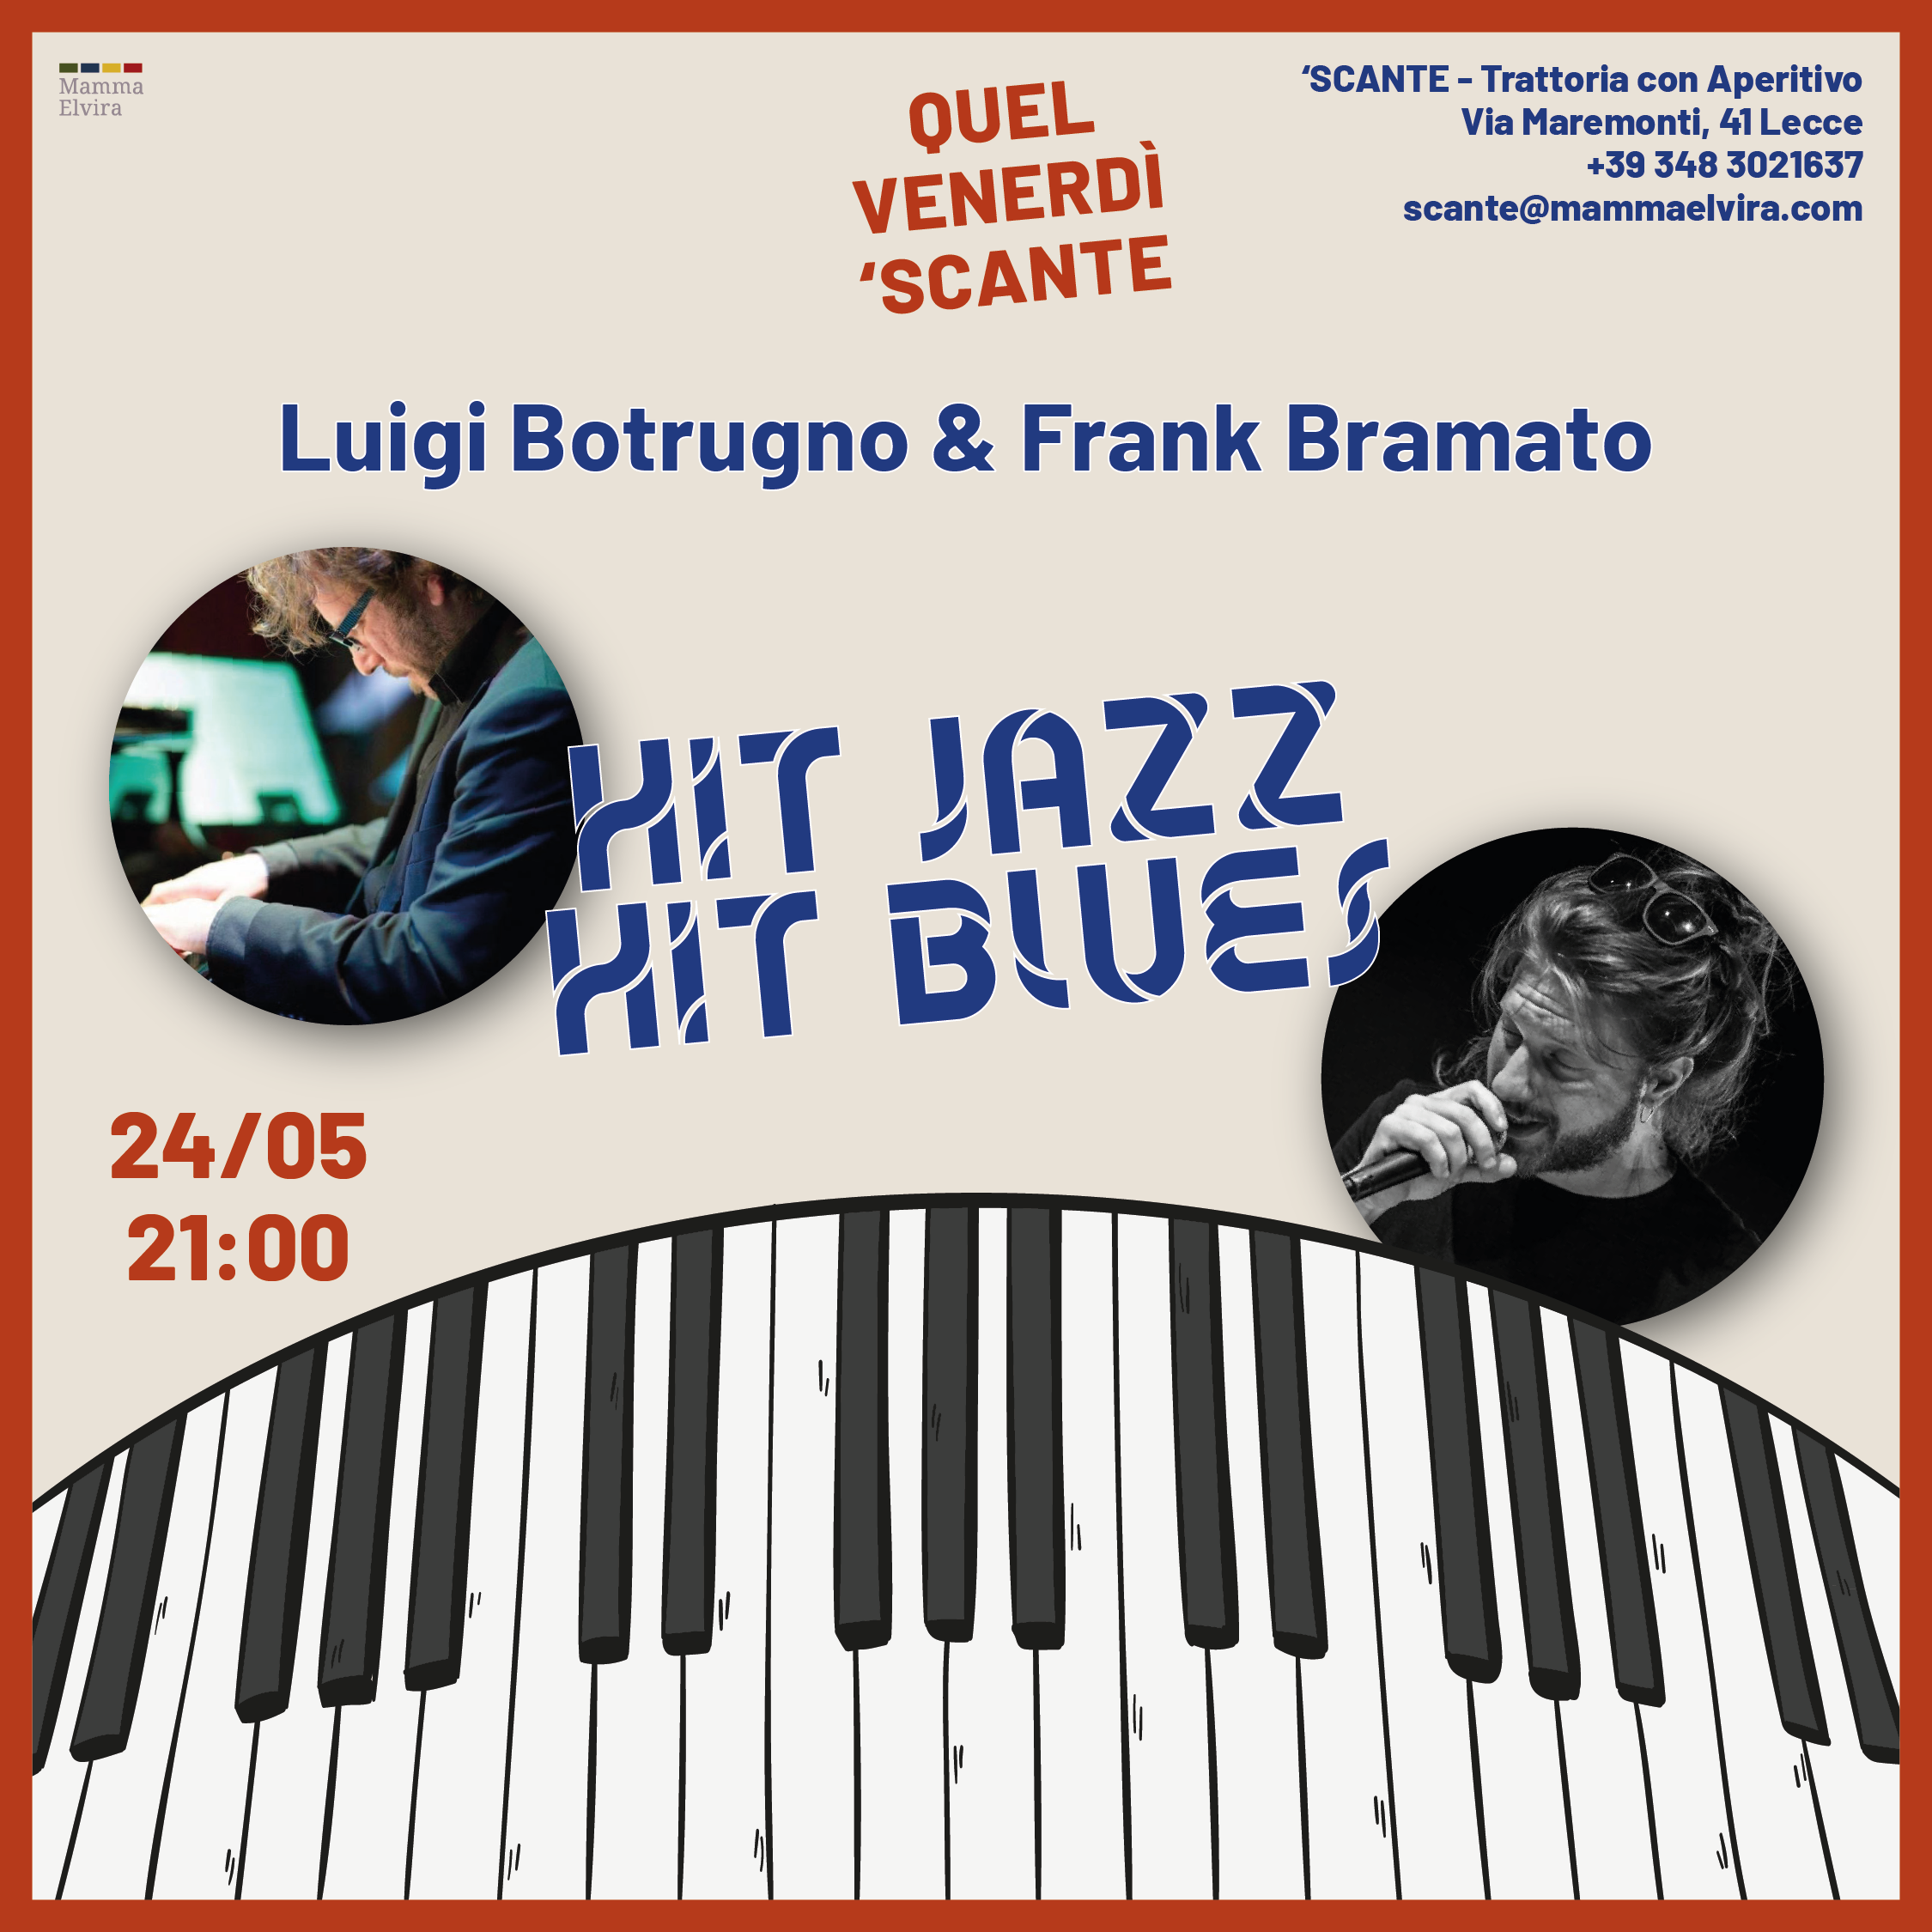 Hit Jazz Hit Blues cover image